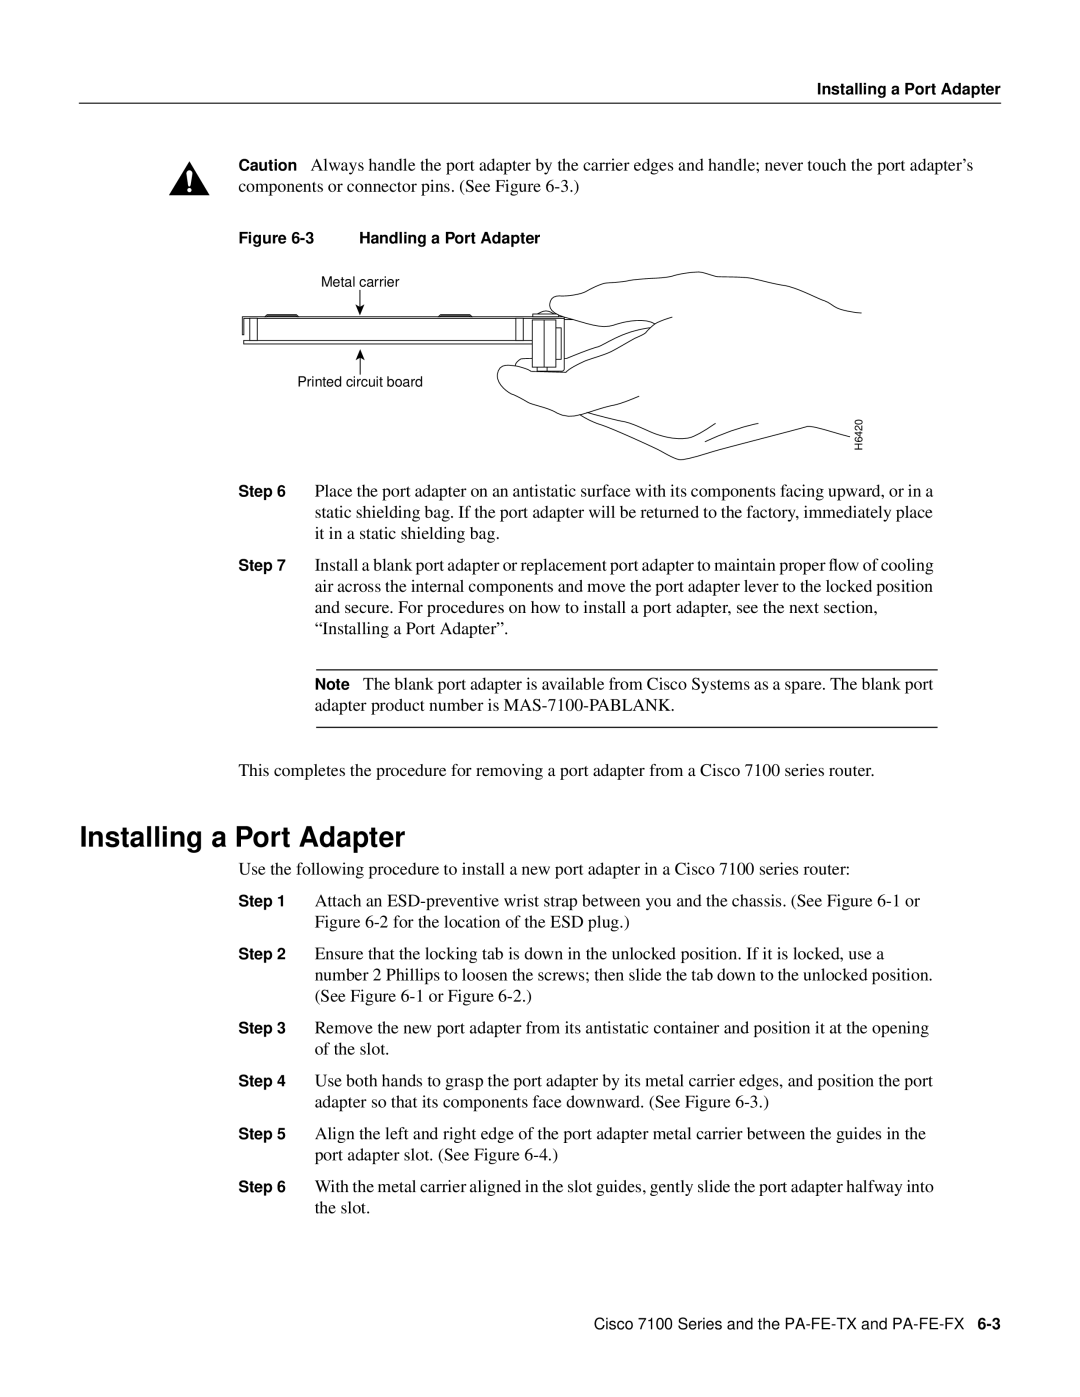 Cisco Systems PA-FE-FX, PA-FE-TX manual Installing a Port Adapter 